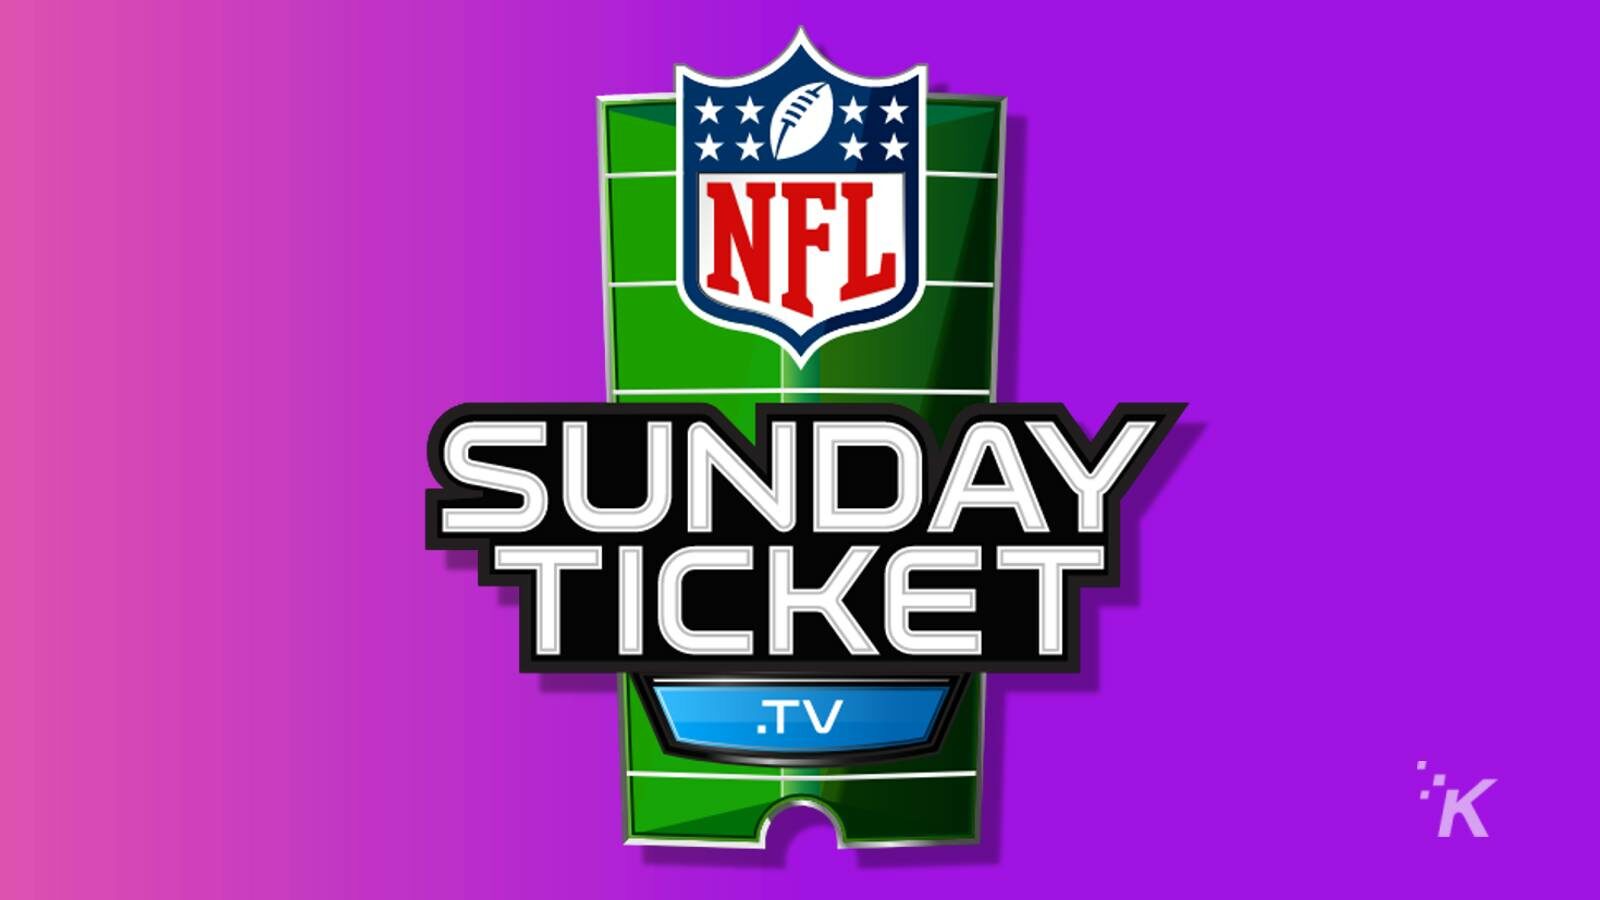 NFL sunday ticket logo on kt background